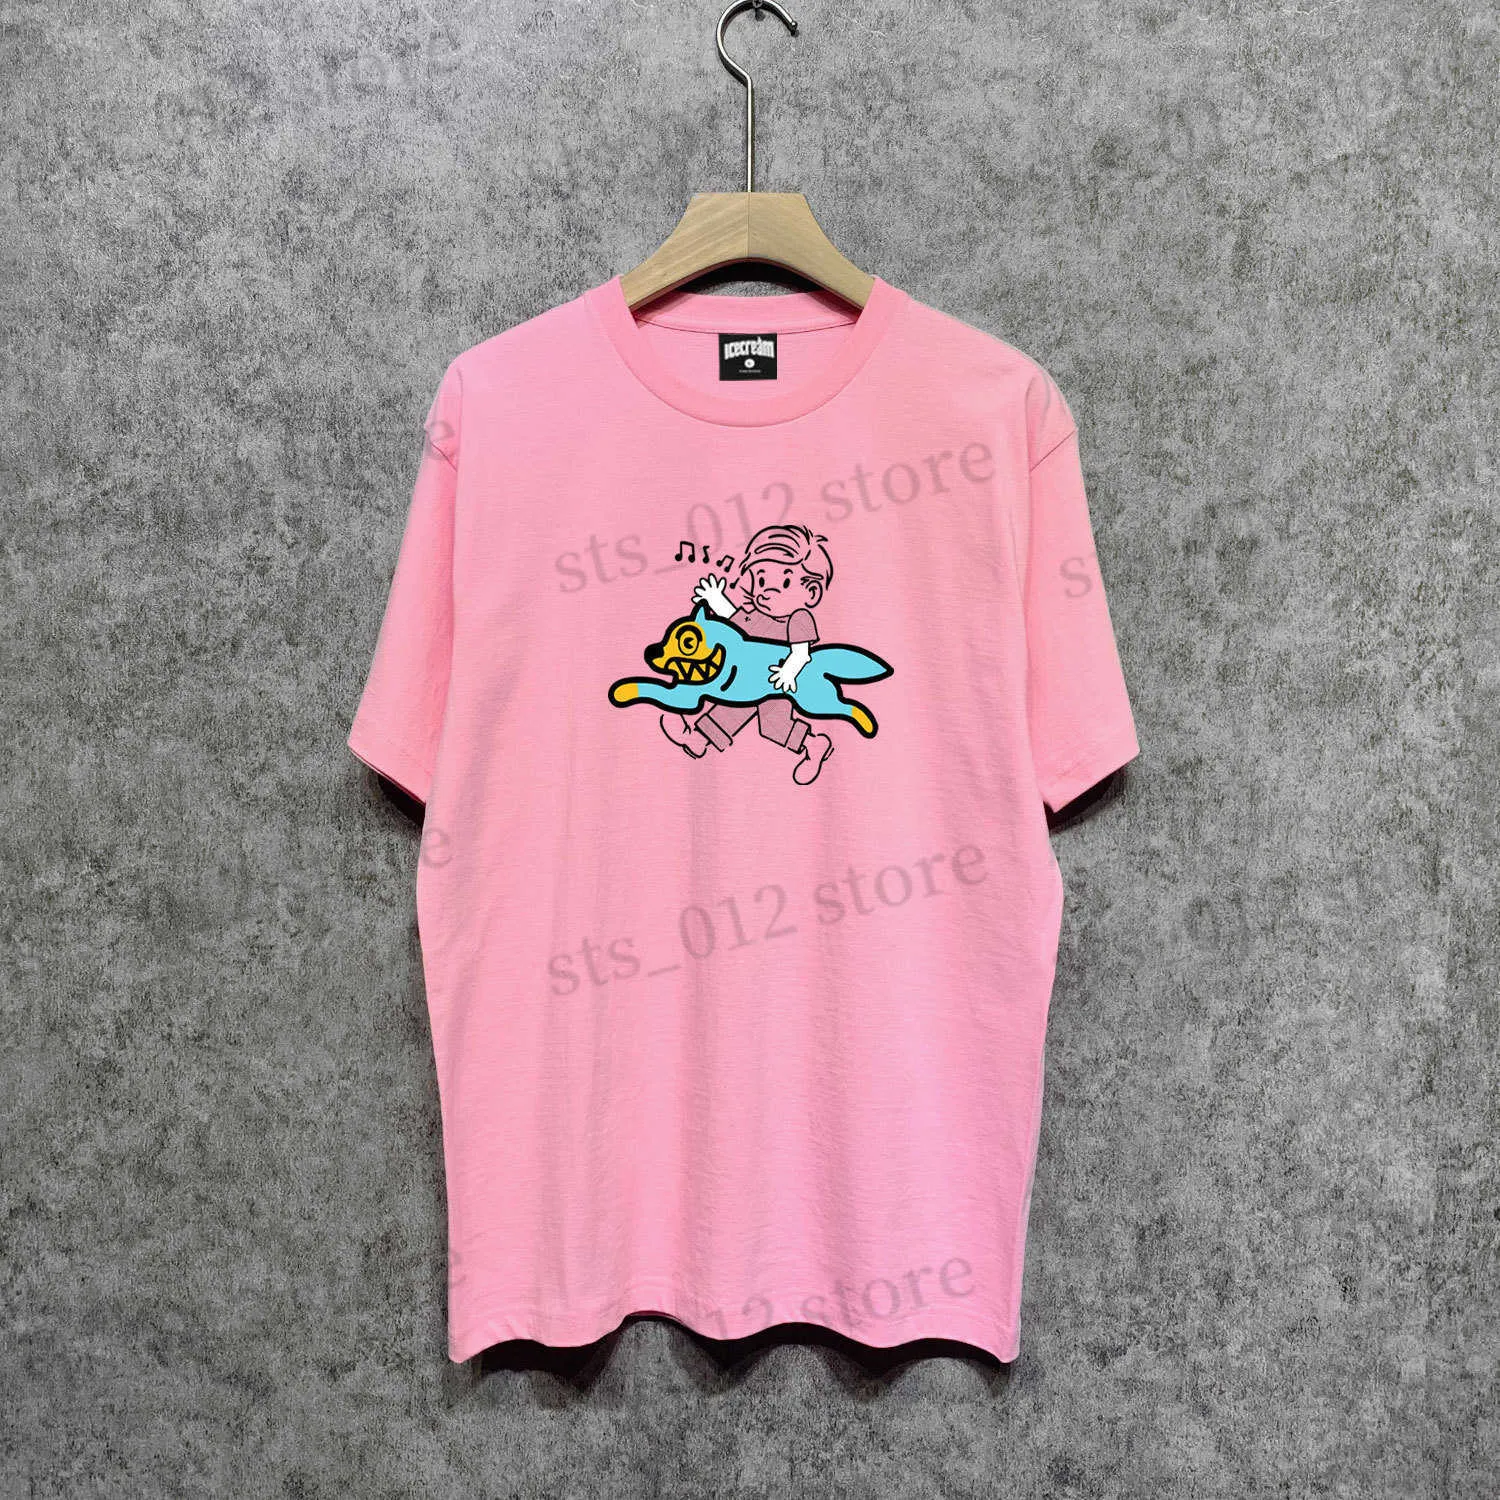 Homens camisetas Flying Dog Boy Impresso Manga Curta Tee Casual Moda Carta Solta Casal T230412